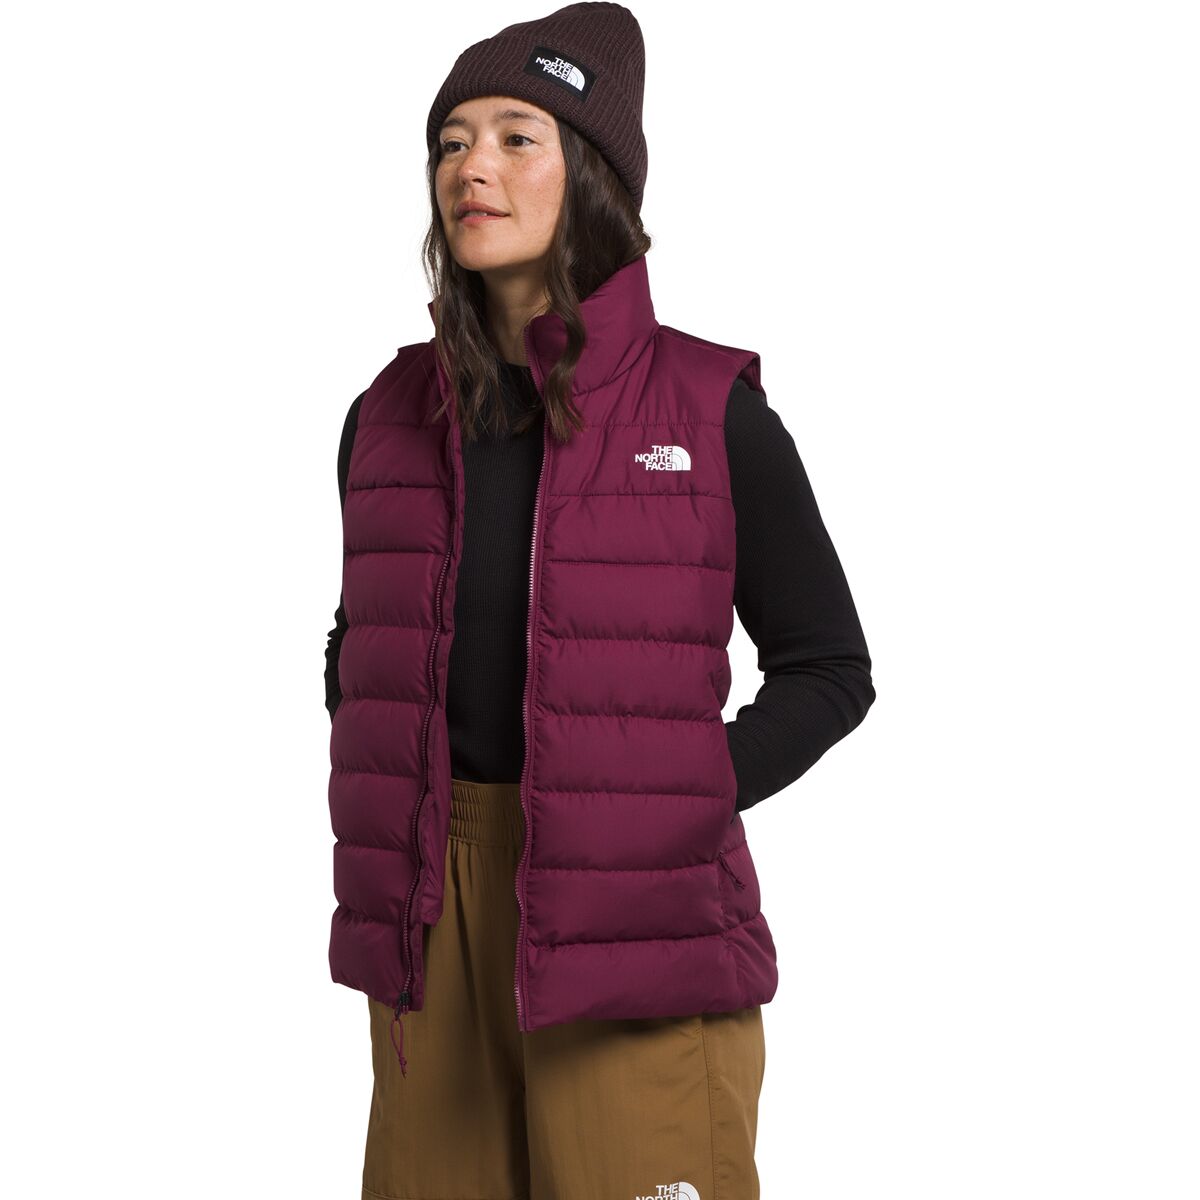 The - Vest Face North Clothing 3 - Women\'s Aconcagua